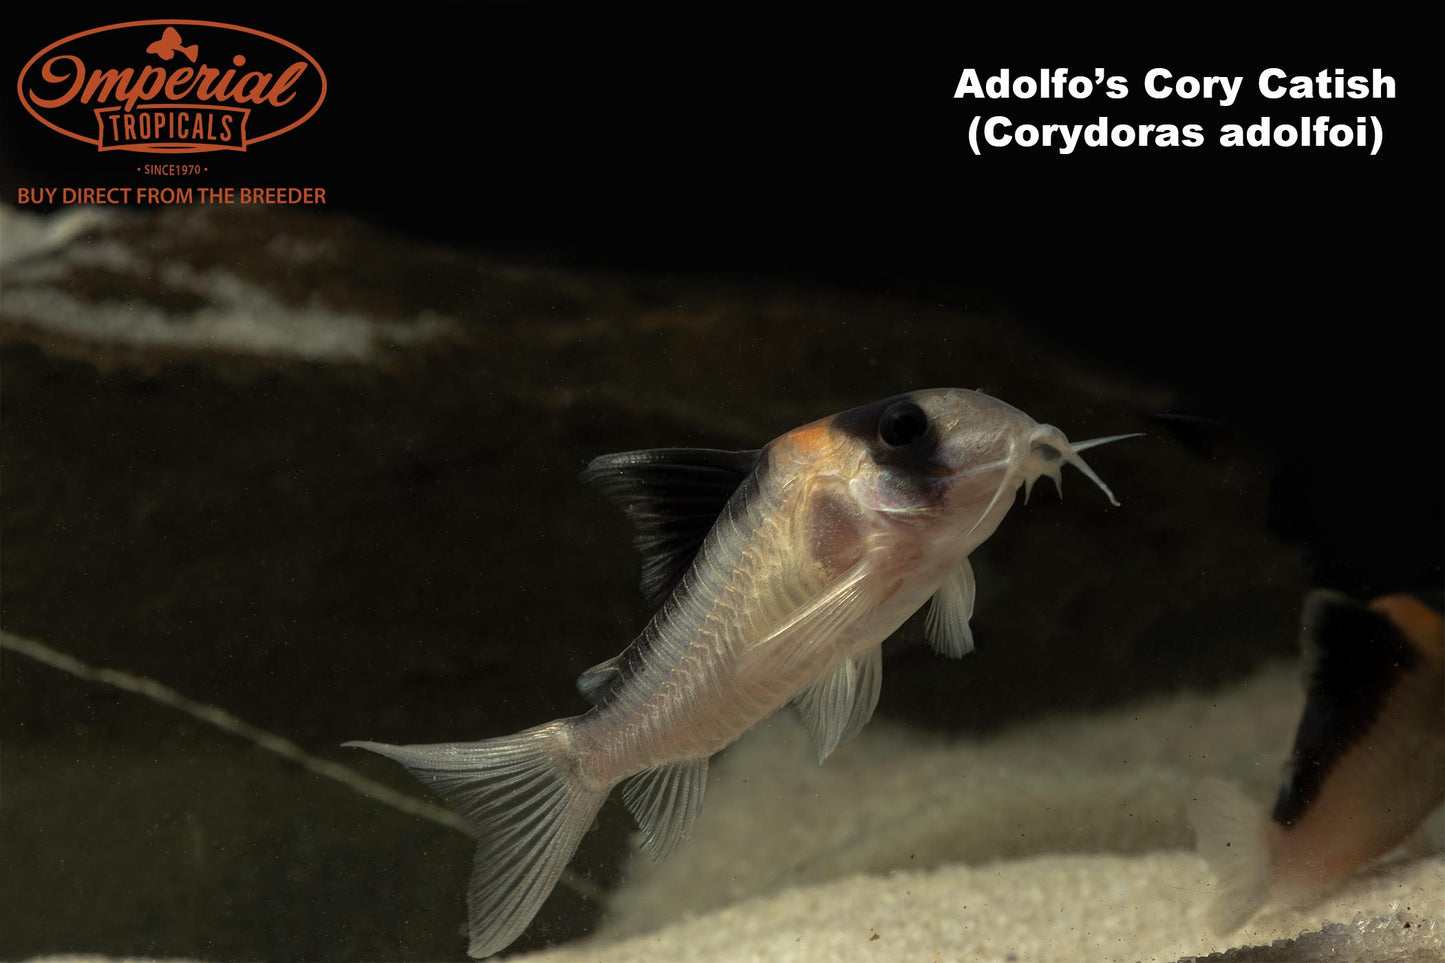 Adolfo's Cory Catfish